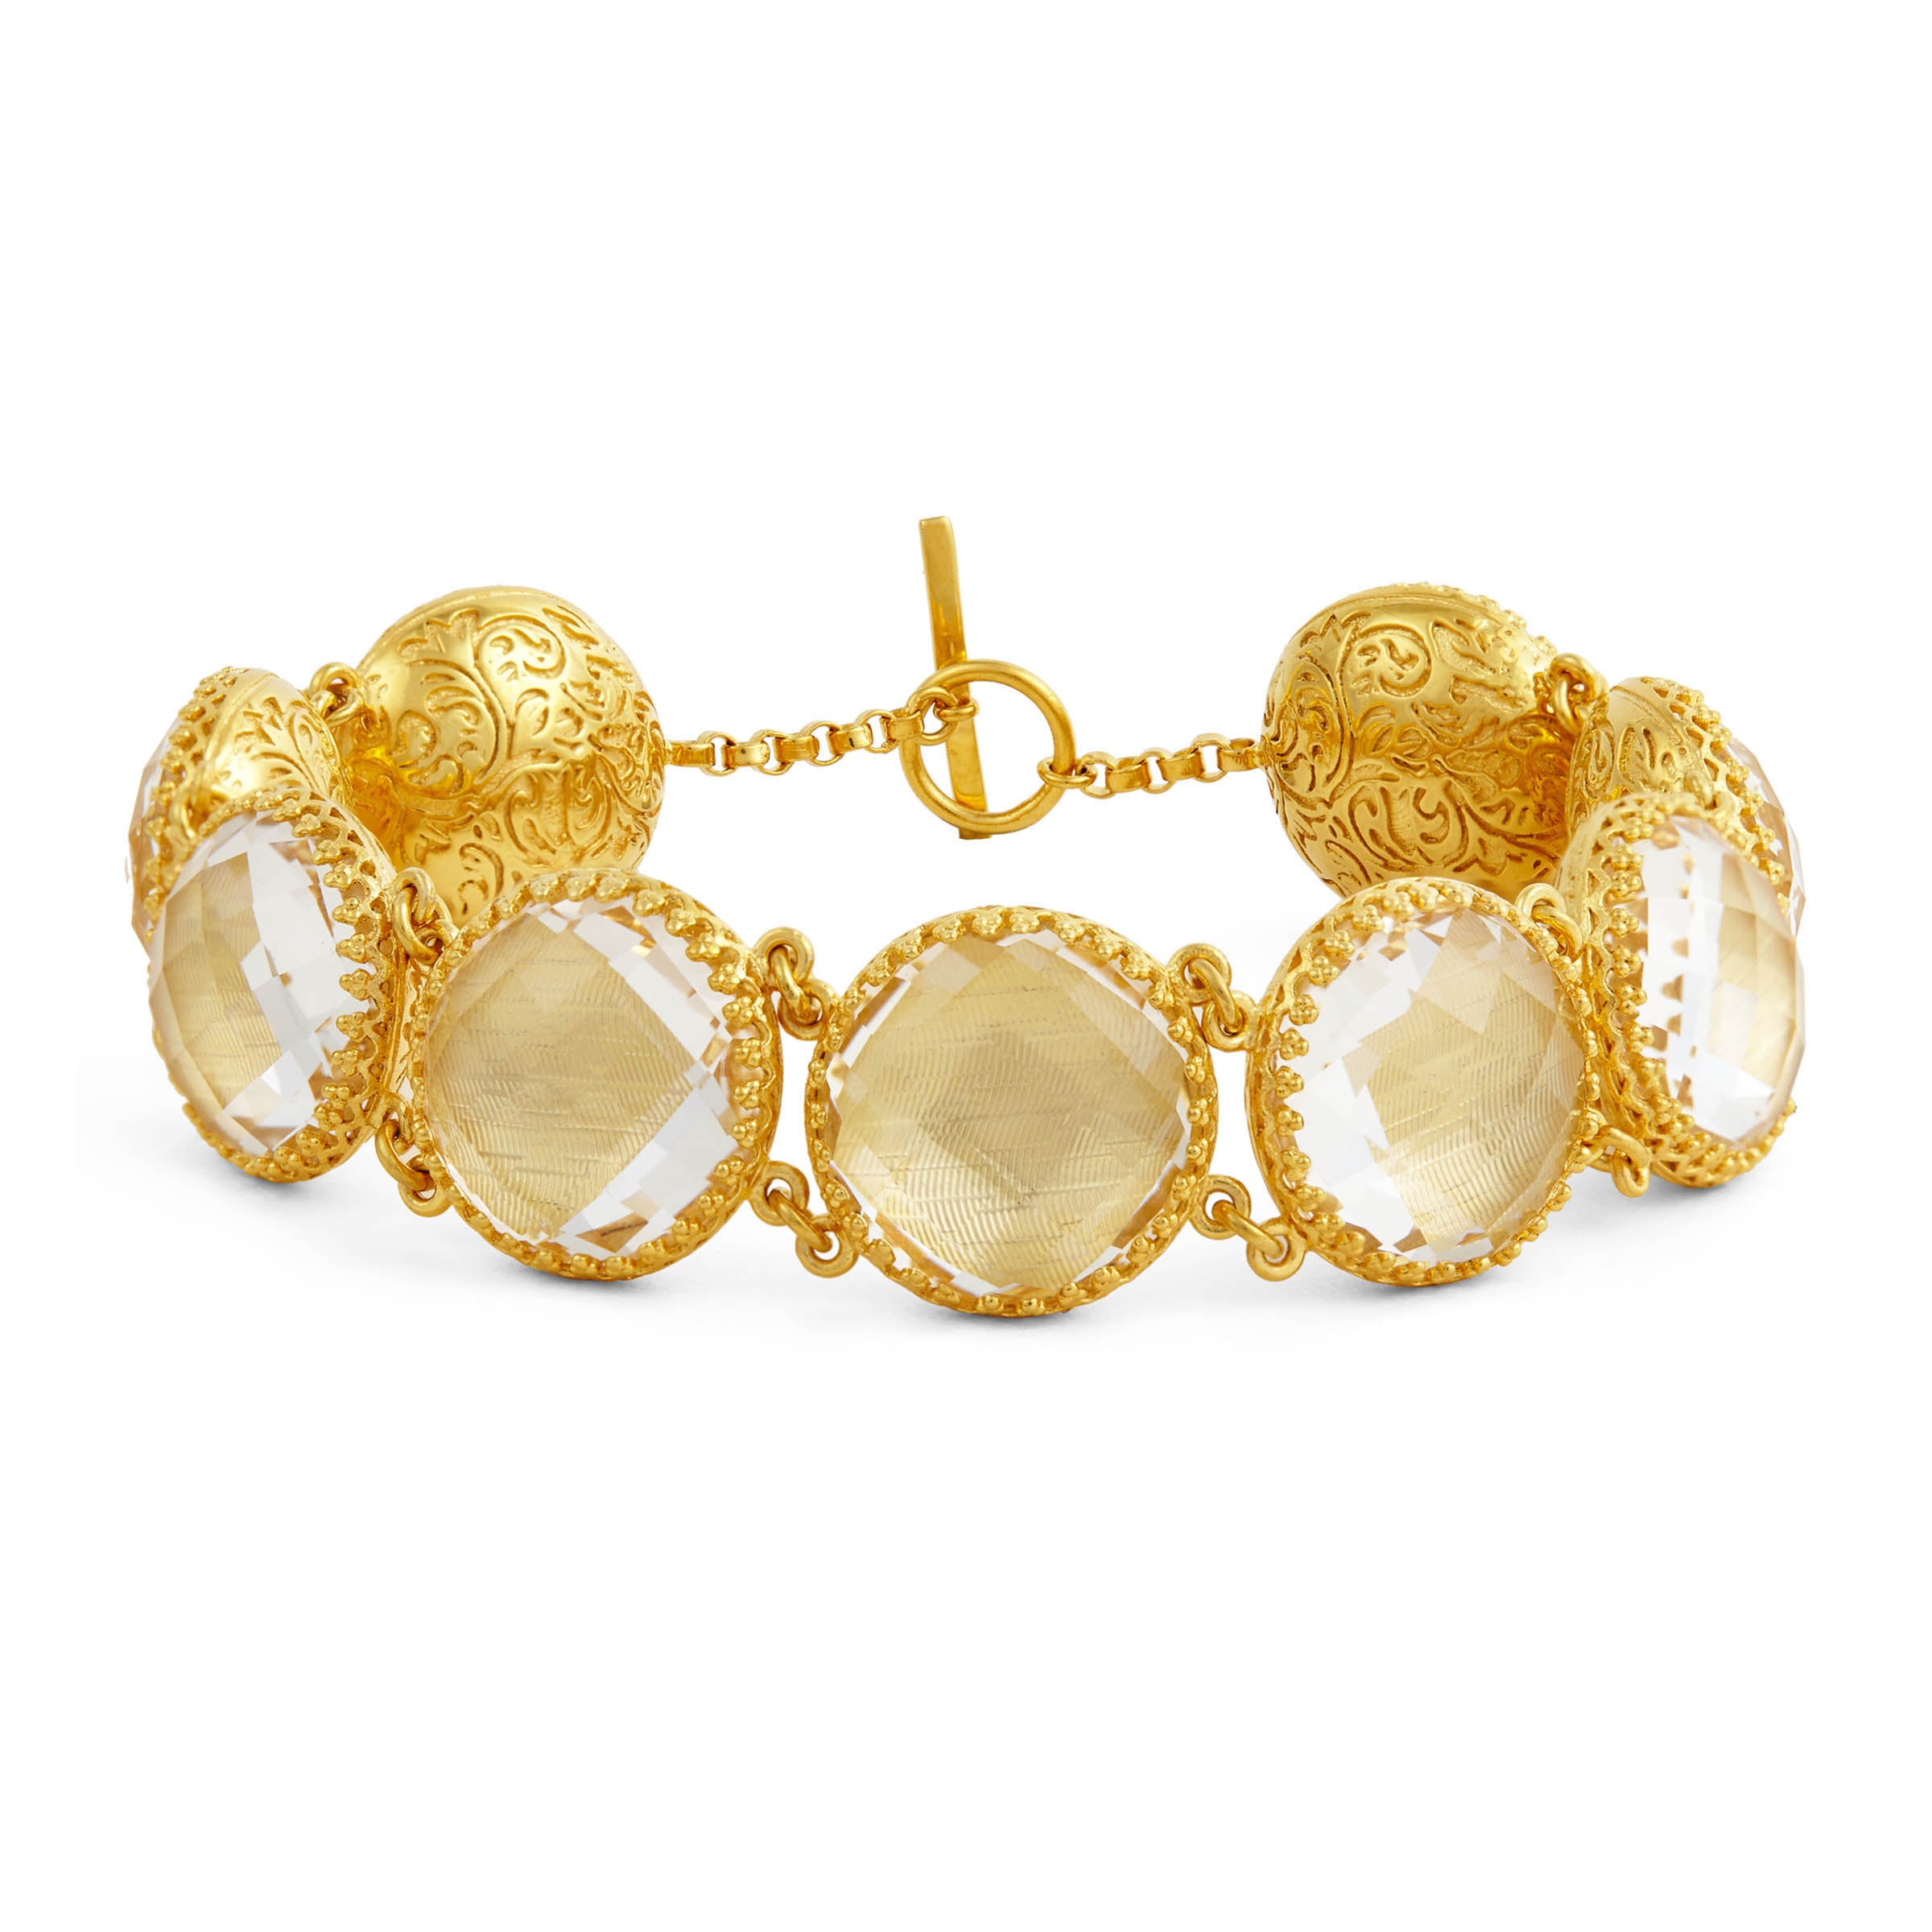 Olivia Button Bracelet (Black Rhodium, Yellow, or Rose Gold Wash)